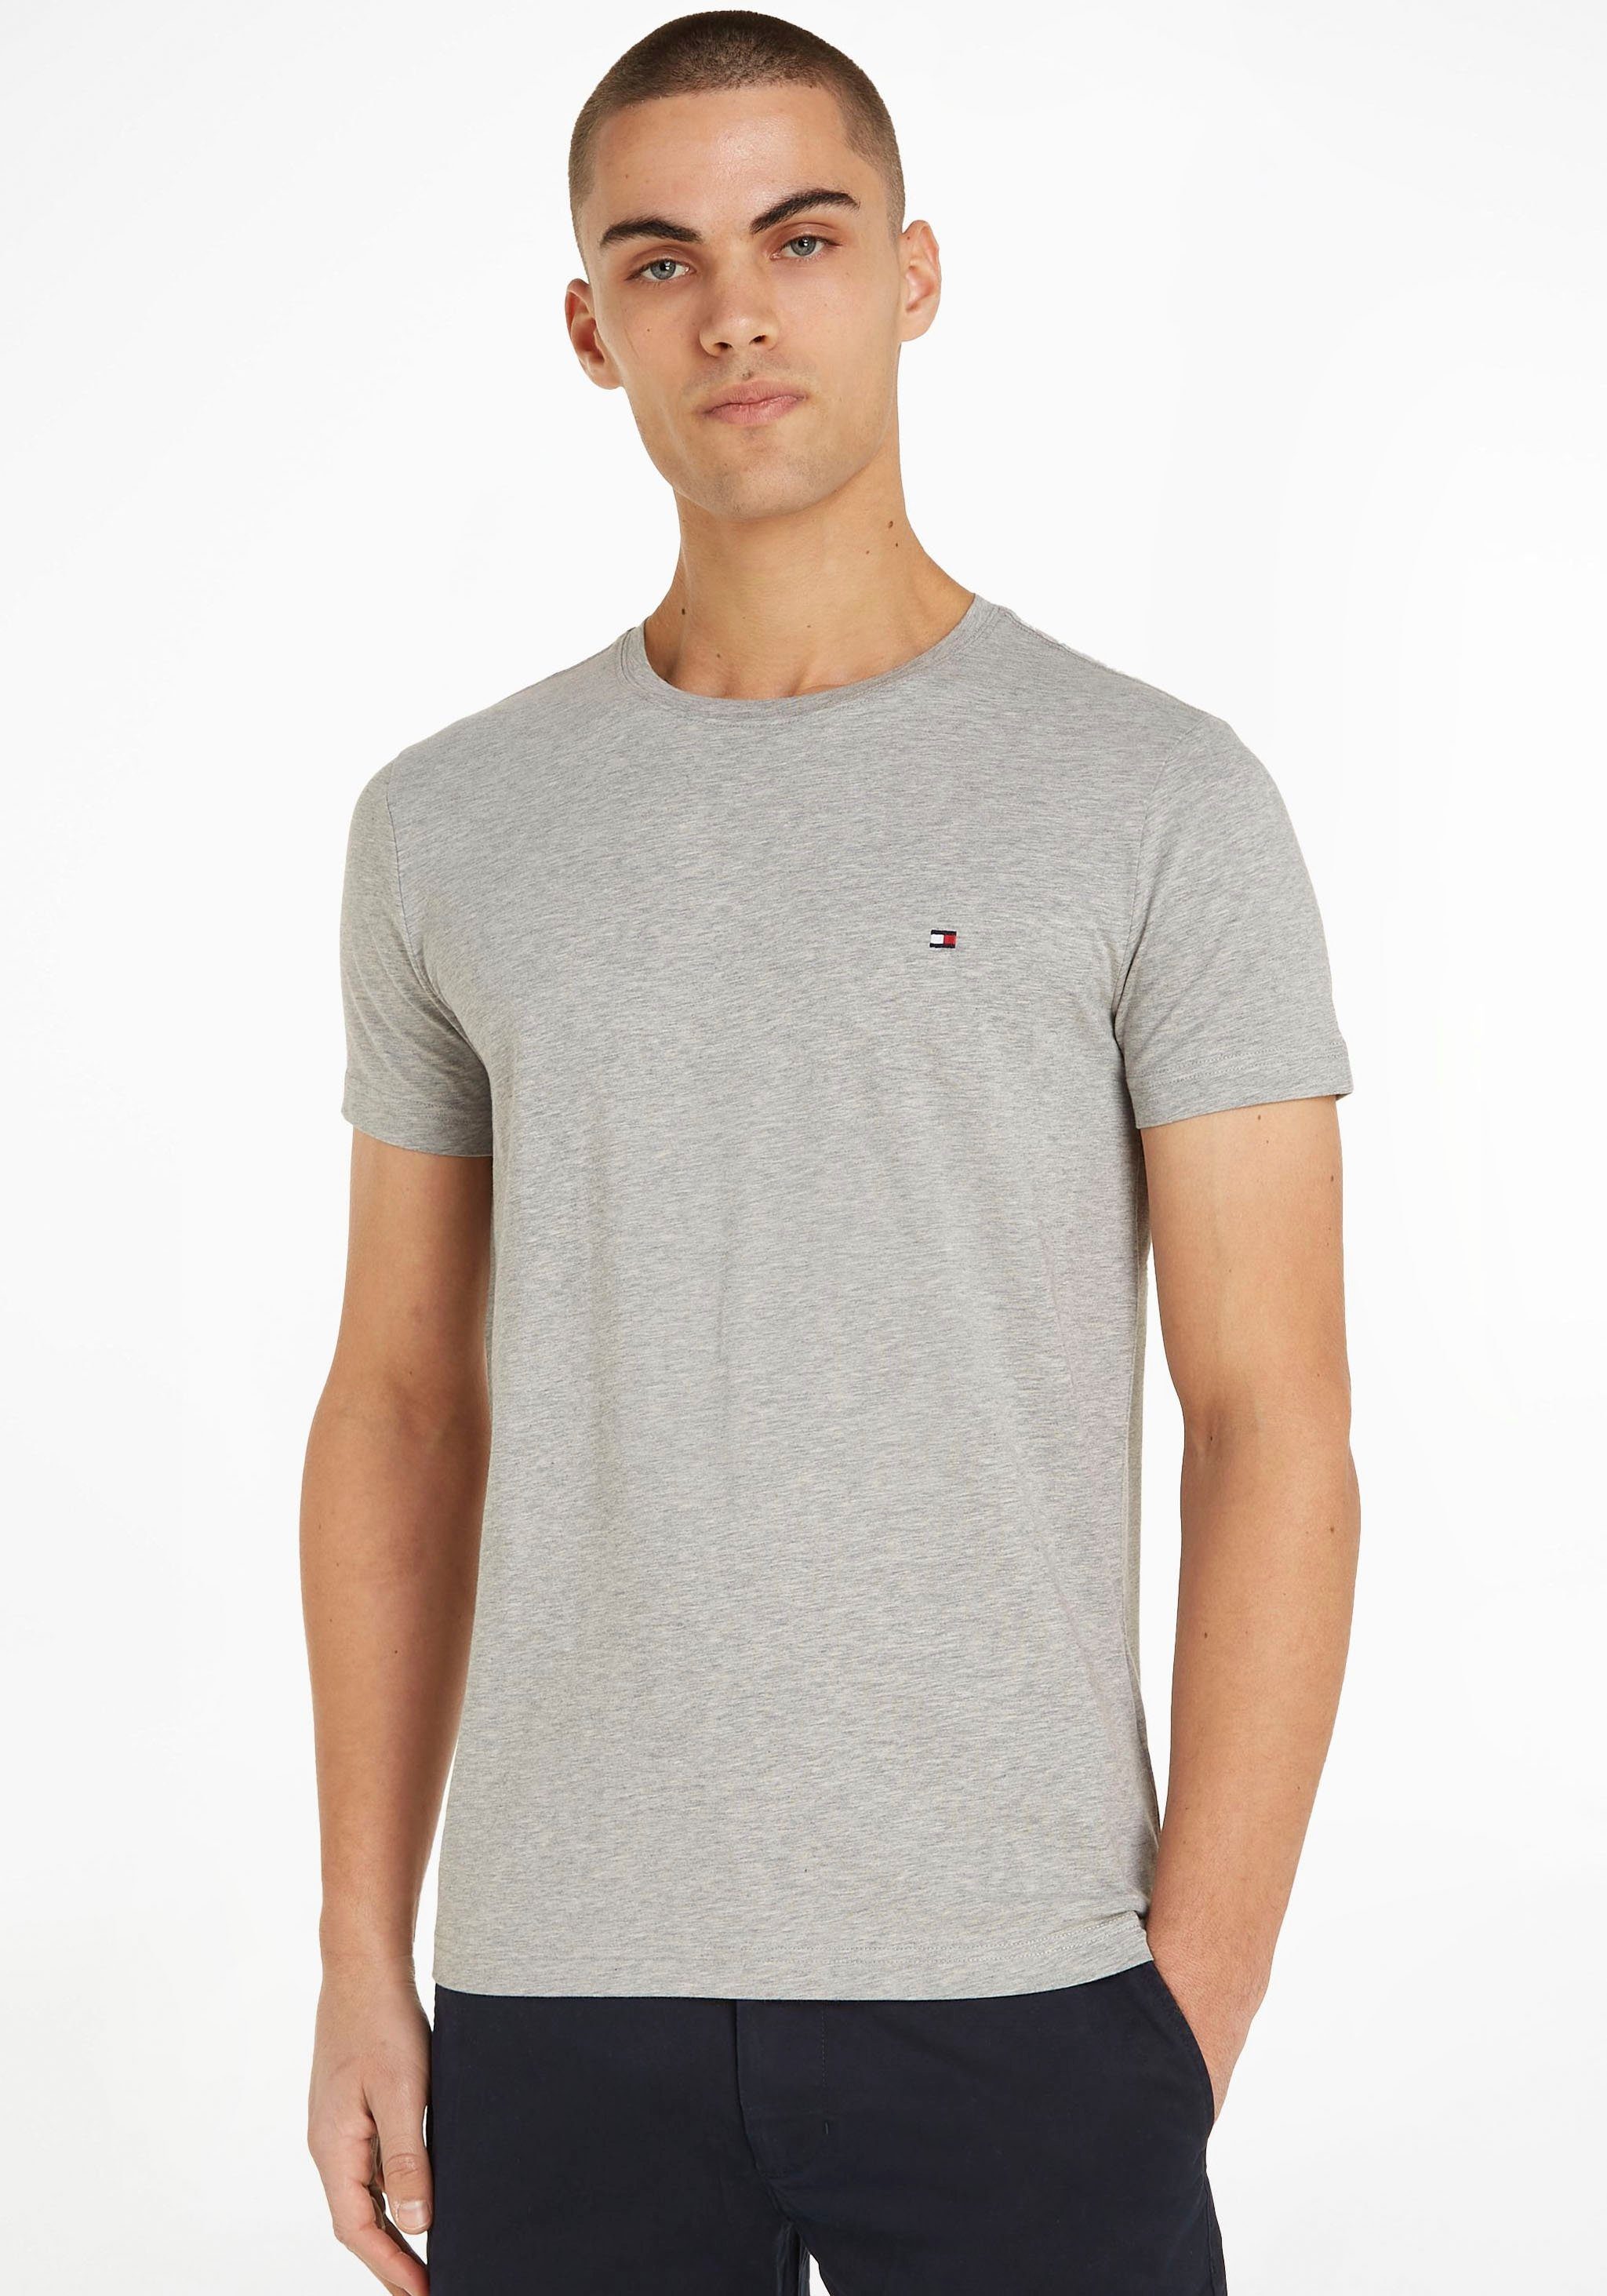 melange Stretch RH T-Shirt Tommy Hilfiger Slim T-Shirt grey